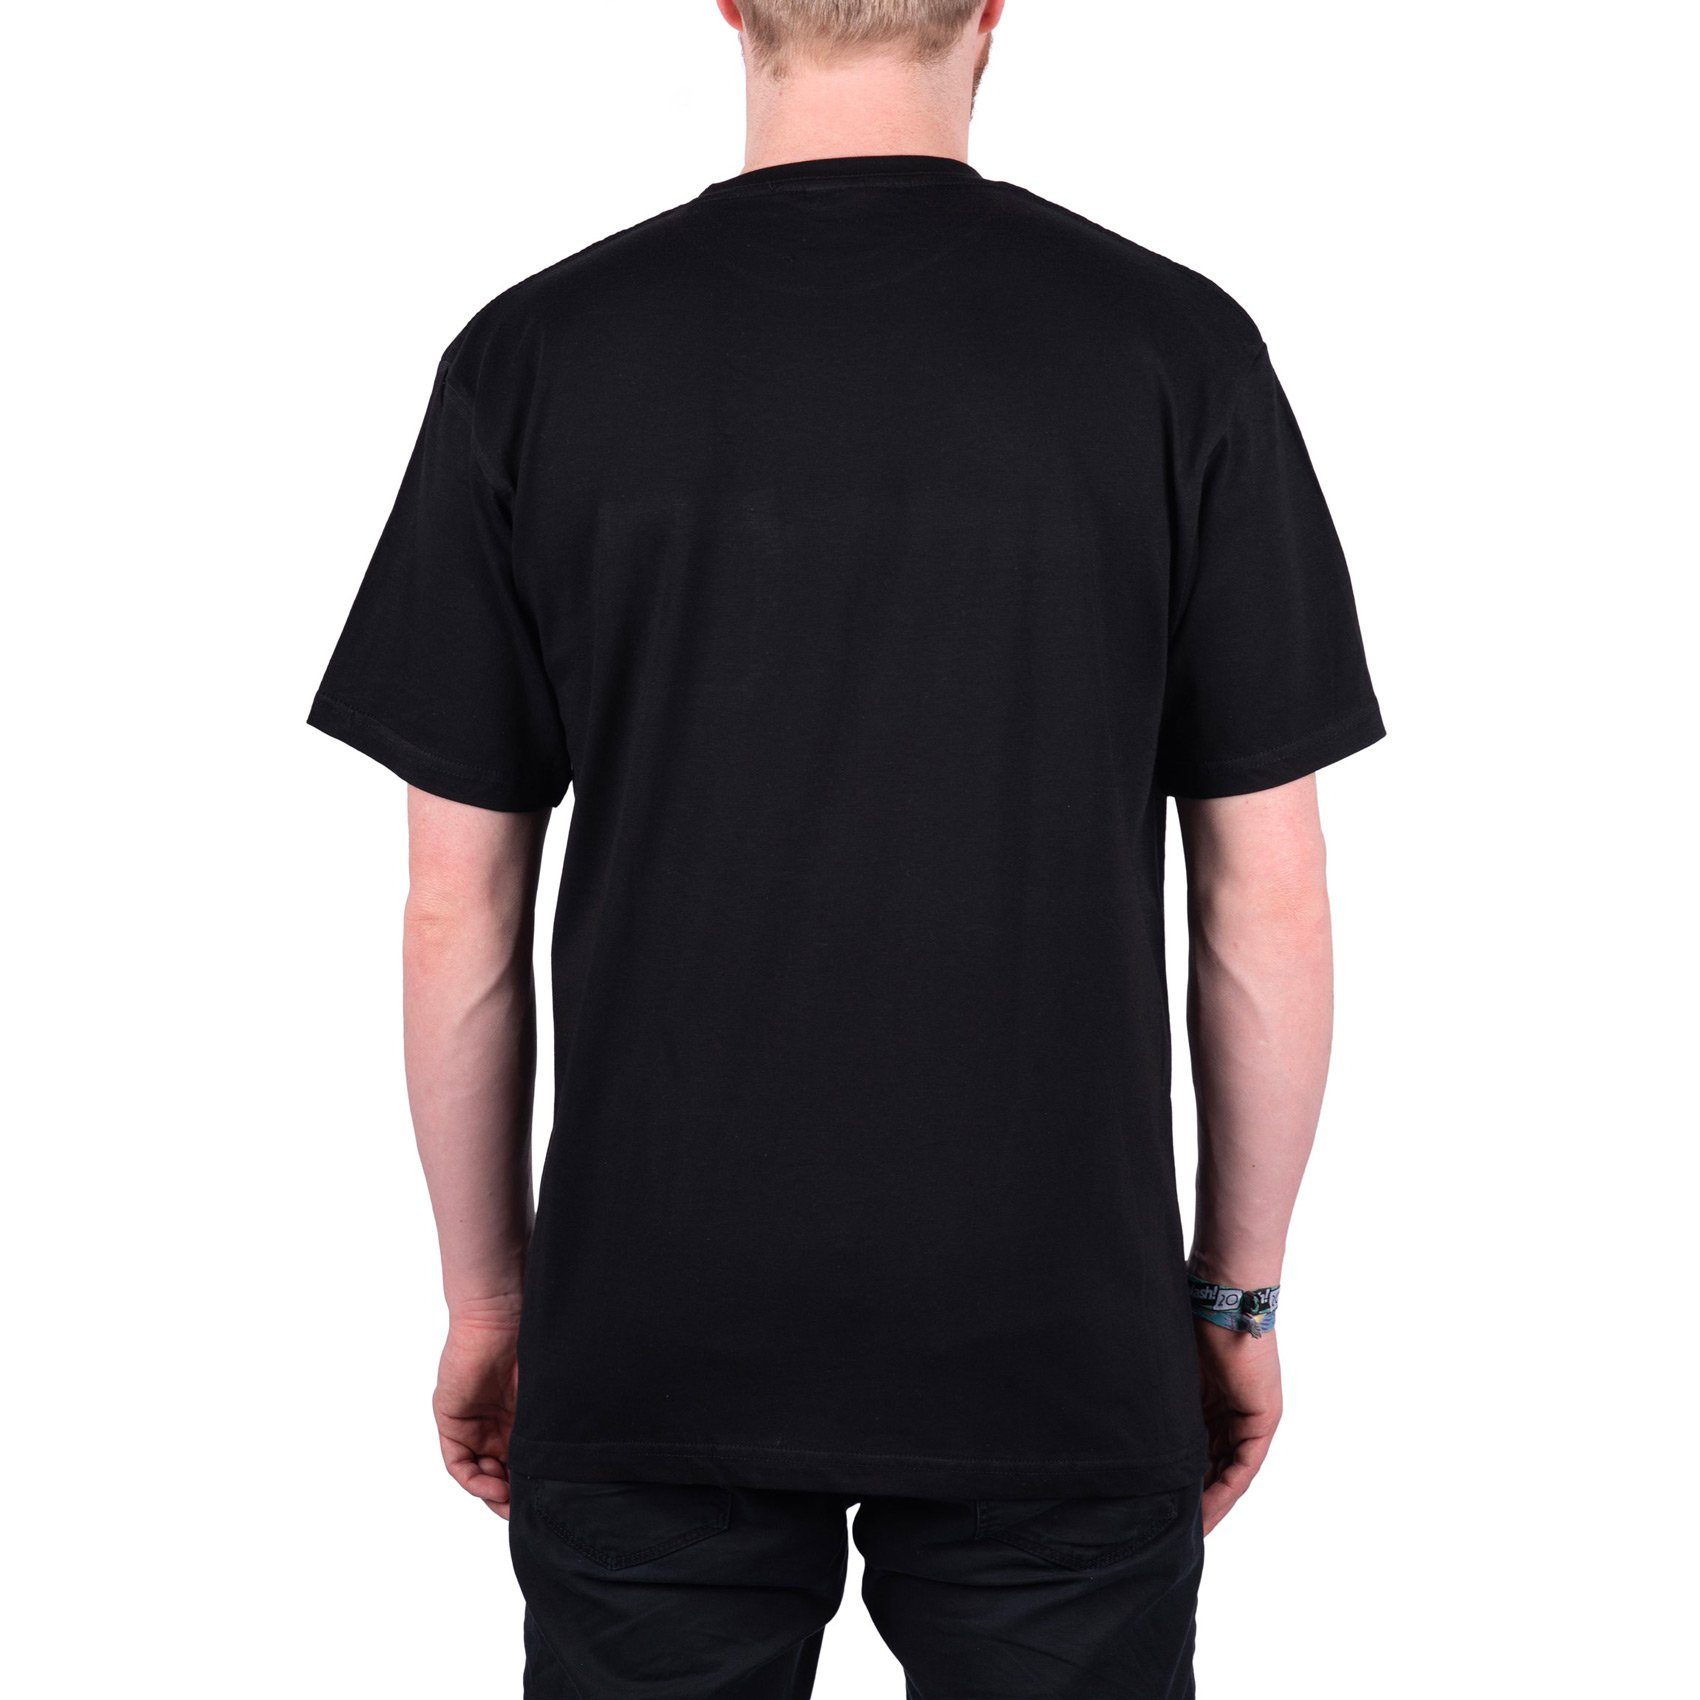 Lord black RIPNDIP Pocket - Nermal T-Shirt